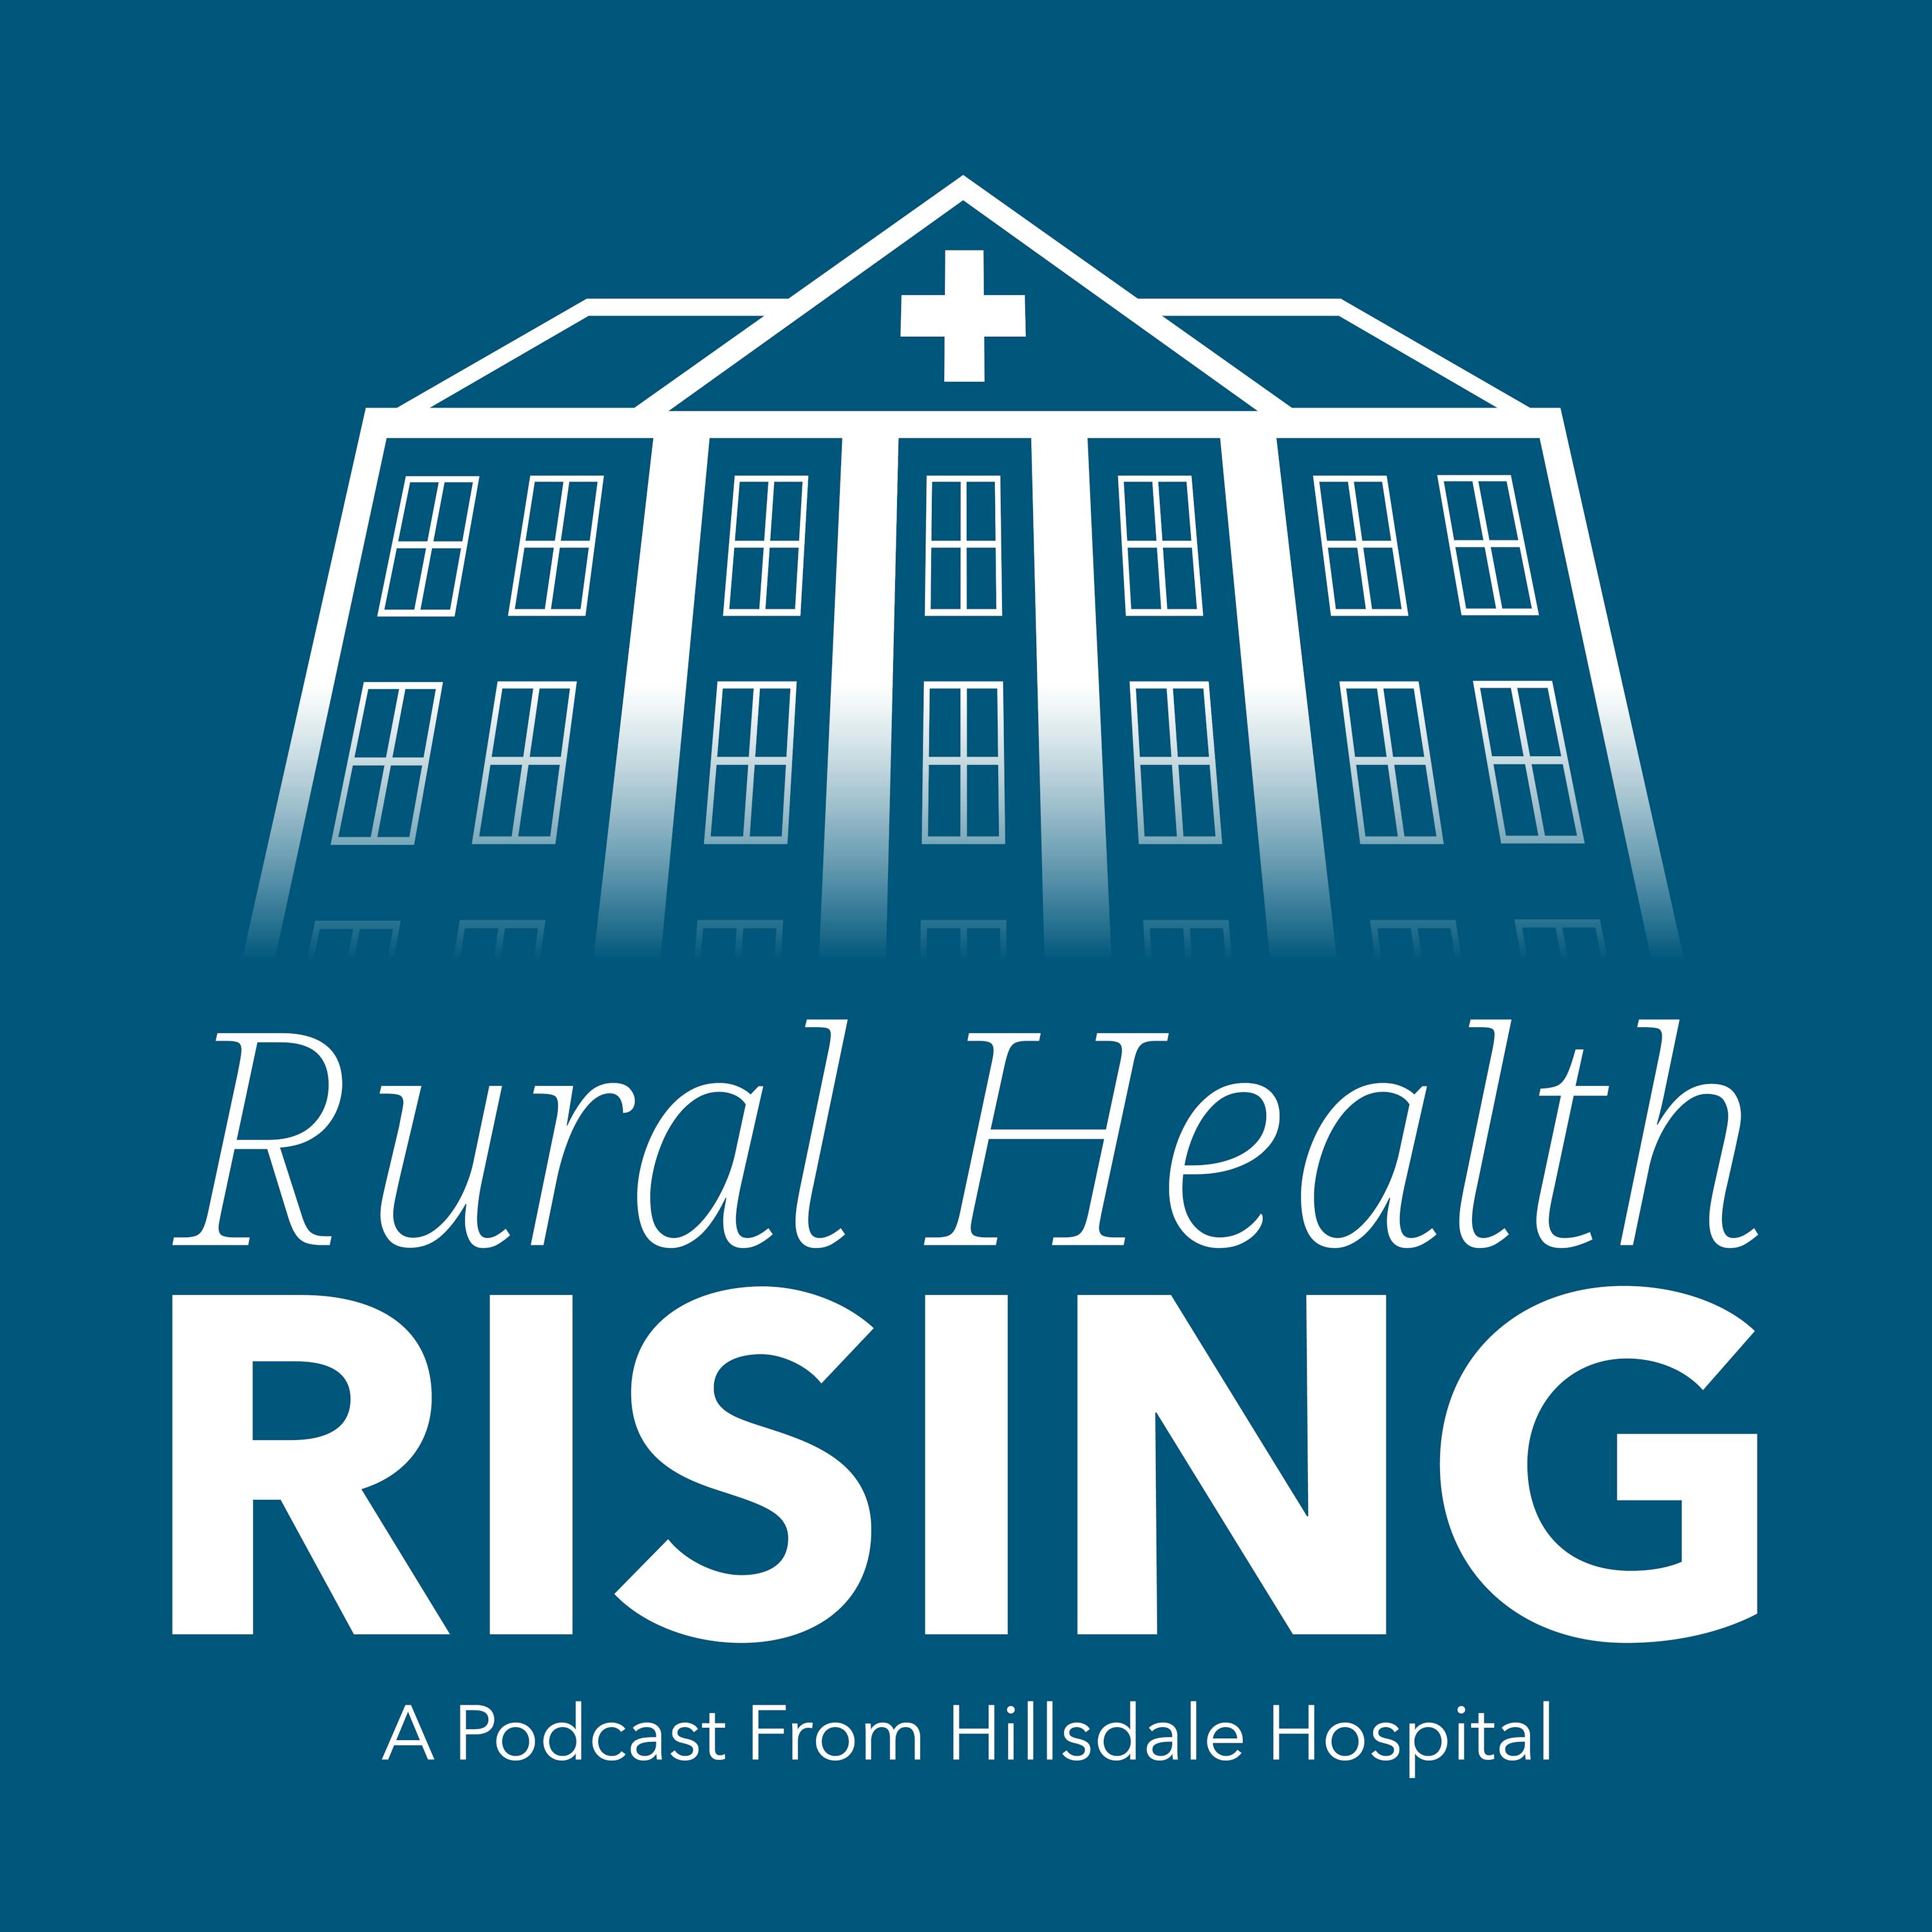 Episode 148: Rural Health Road Trip: The Volunteer State